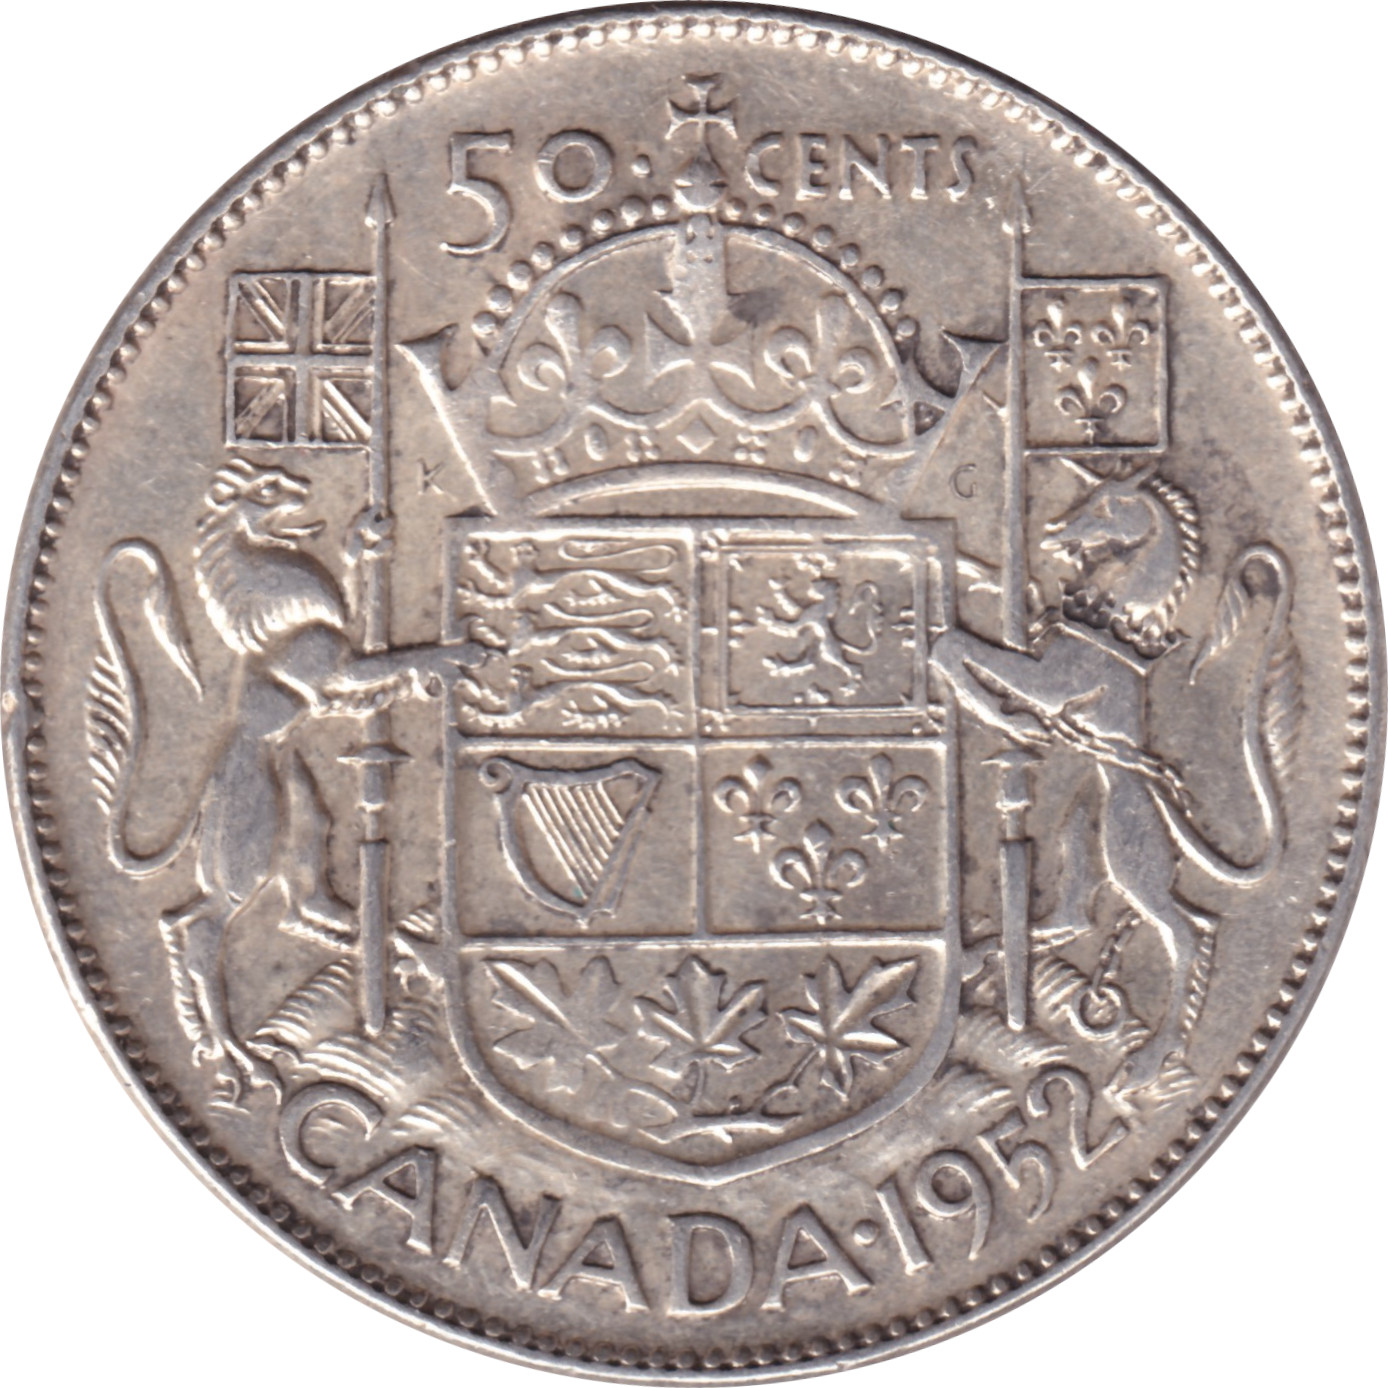 50 cents - George VI